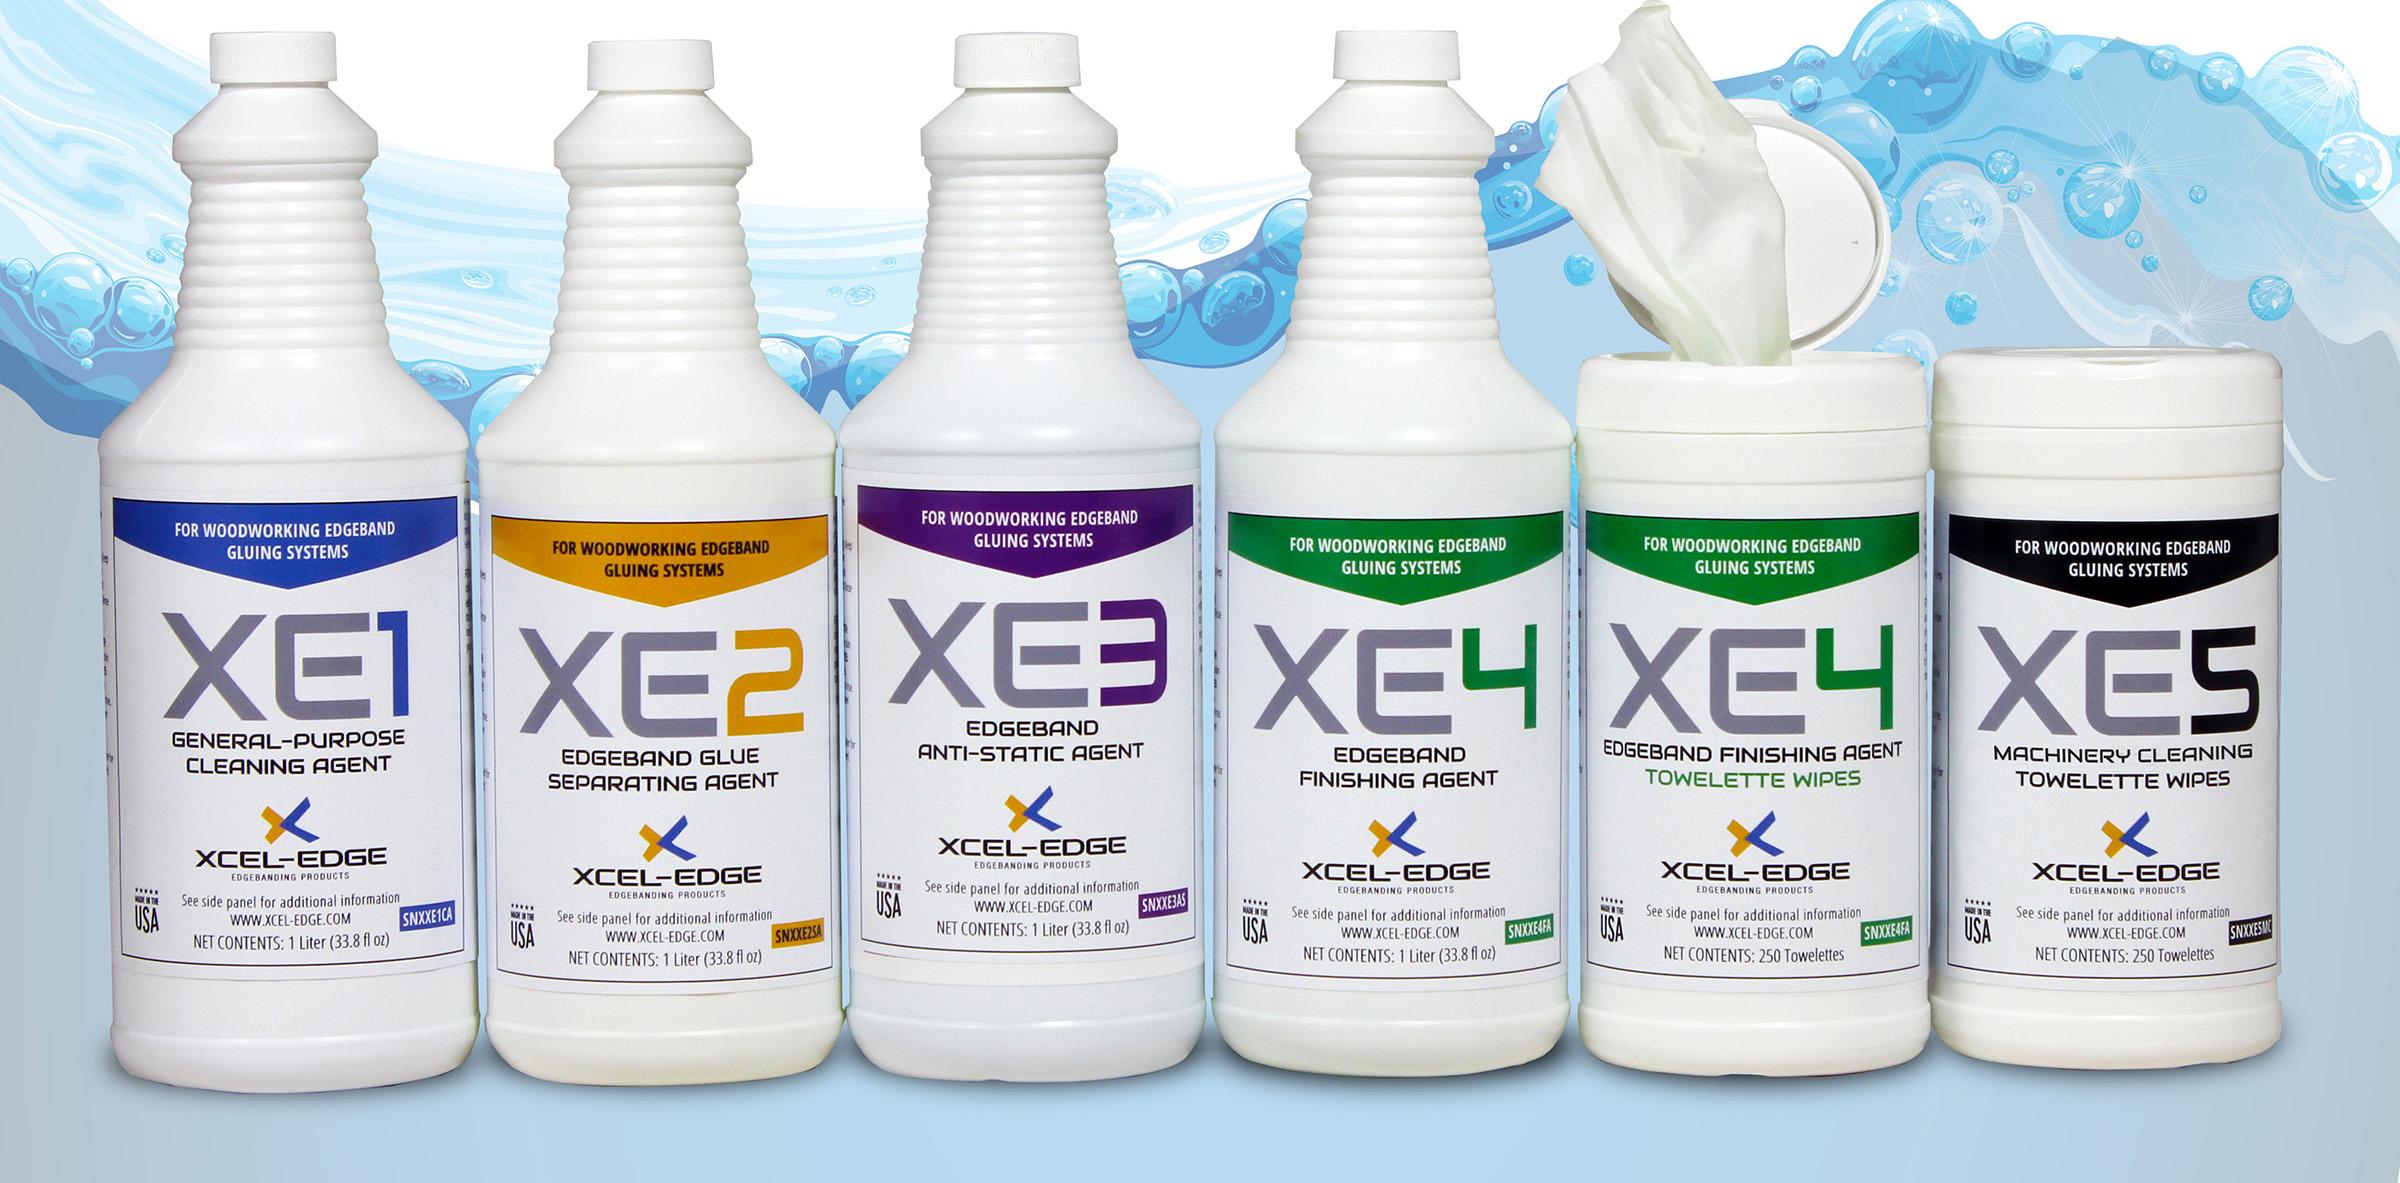 snx-xcel-edge-edgebander-chemical-products.jpg